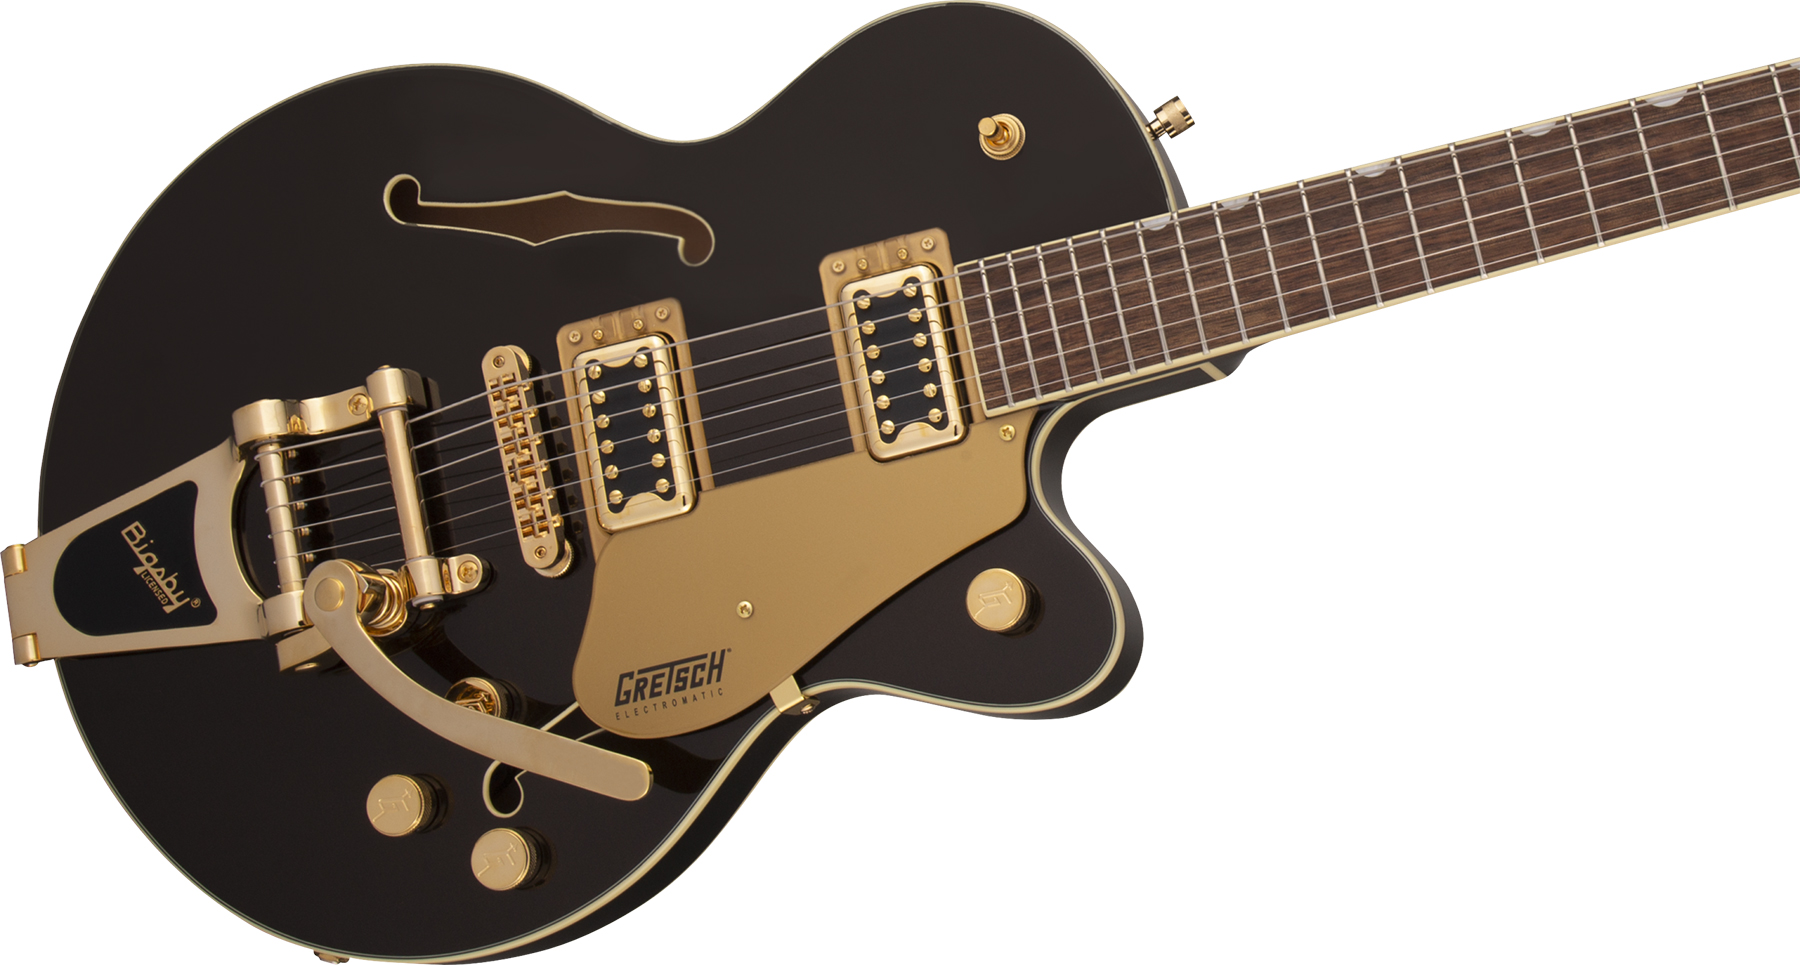 Gretsch G5655tg Electromatic Center Block Jr. Bigsby 2h Trem Lau - Black Gold - Semi-hollow electric guitar - Variation 2